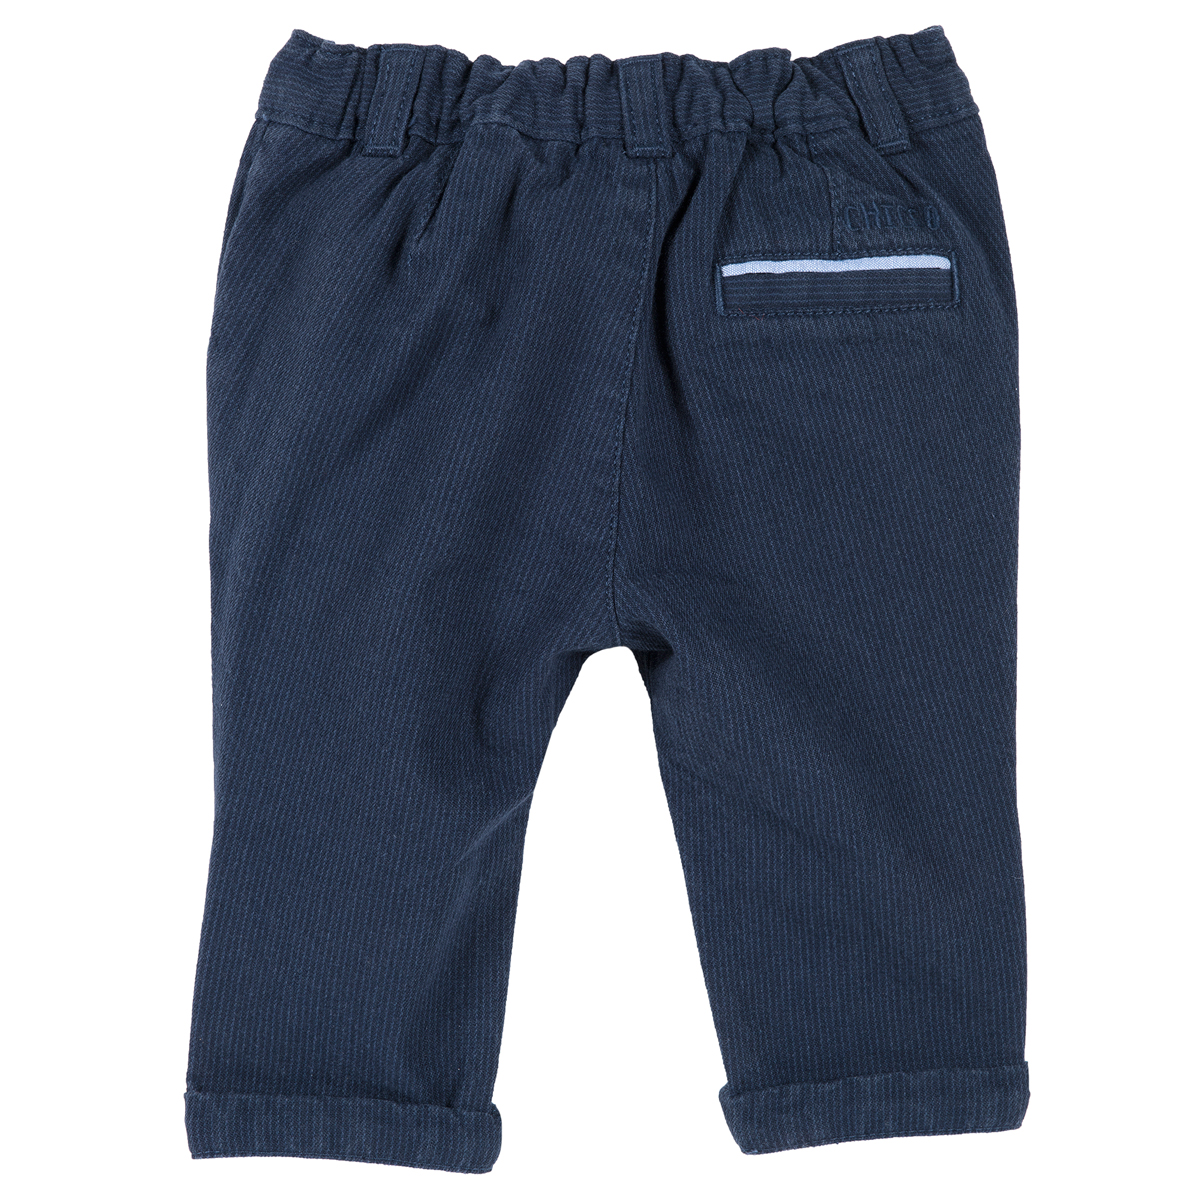 Pantalon lung copii Chicco, elastic, albastru, 24913